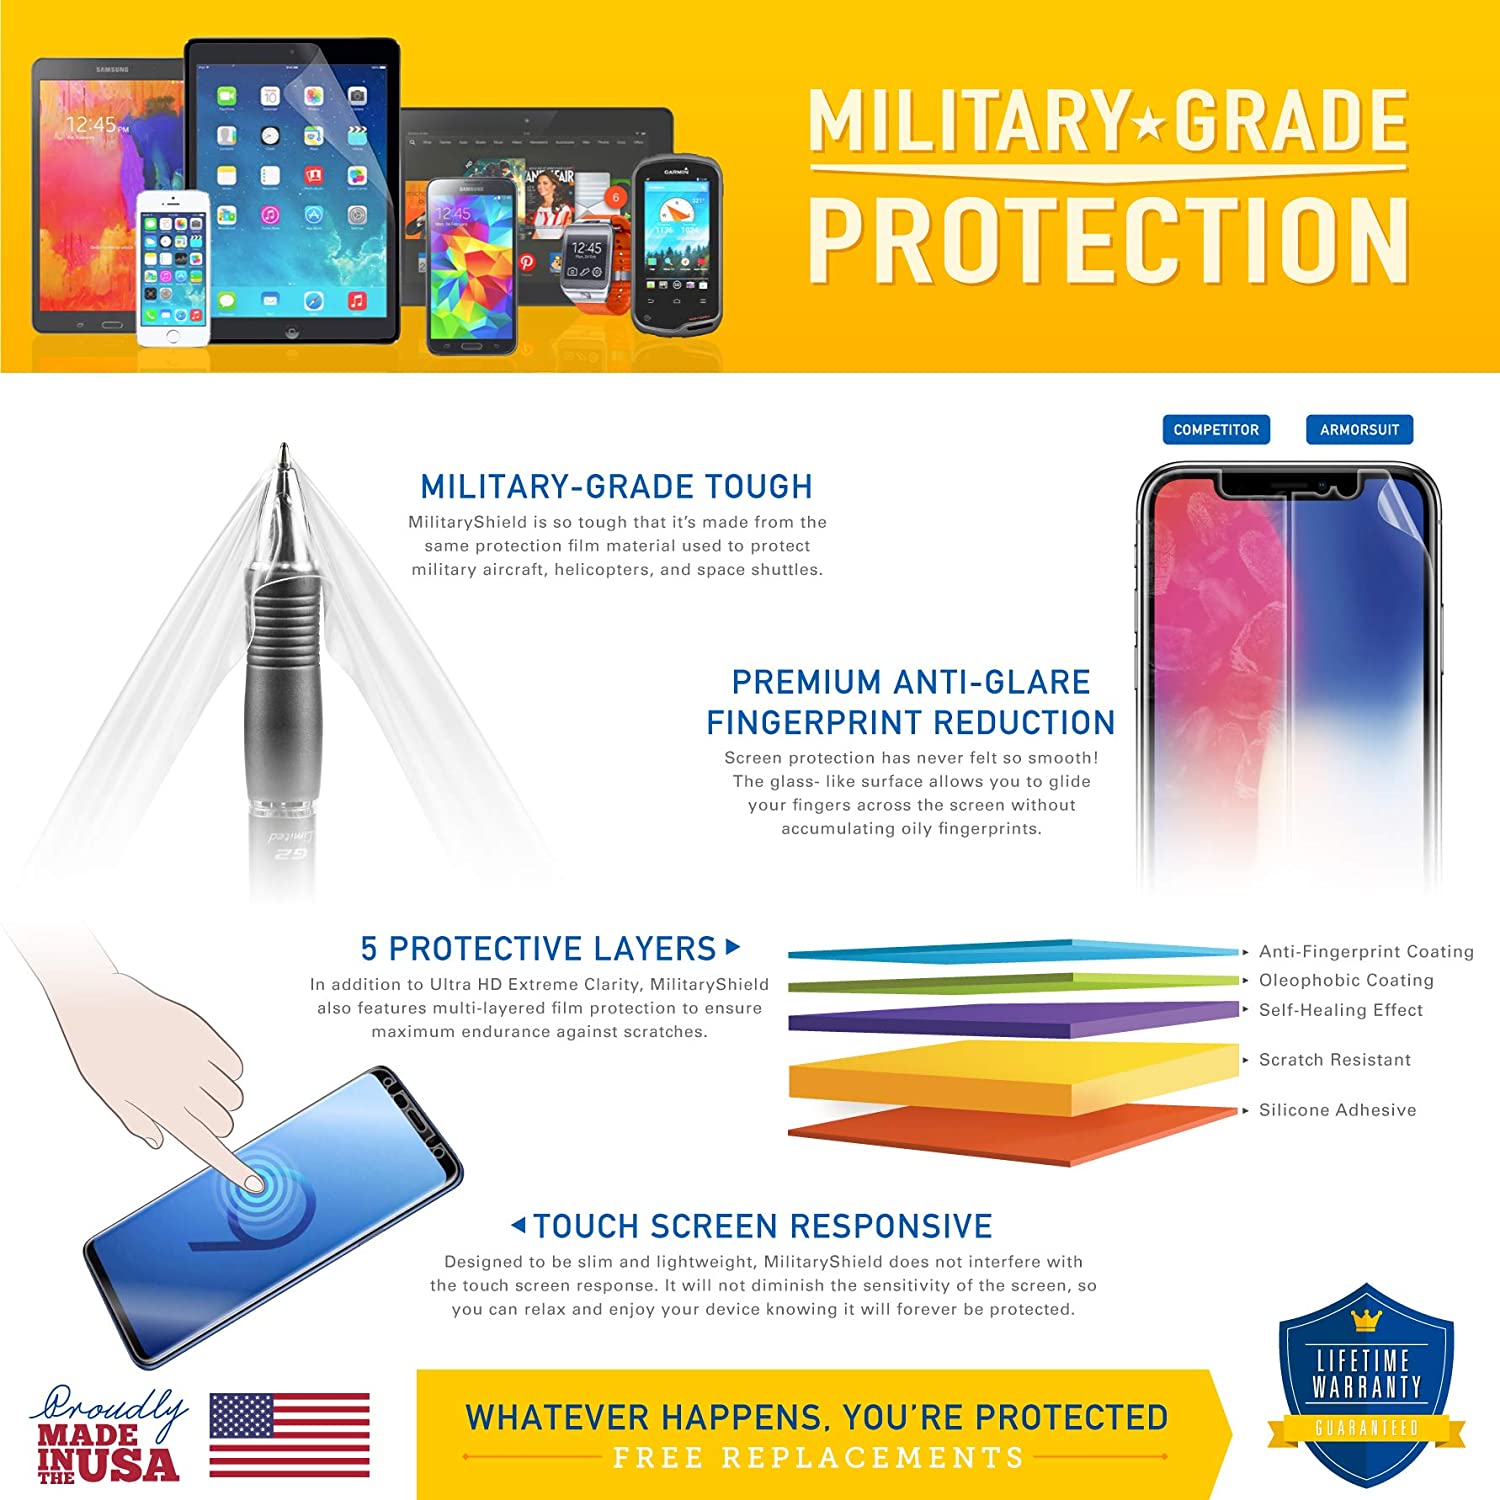 [2-Pack] Samsung Galaxy J7 (2016) Screen Protector